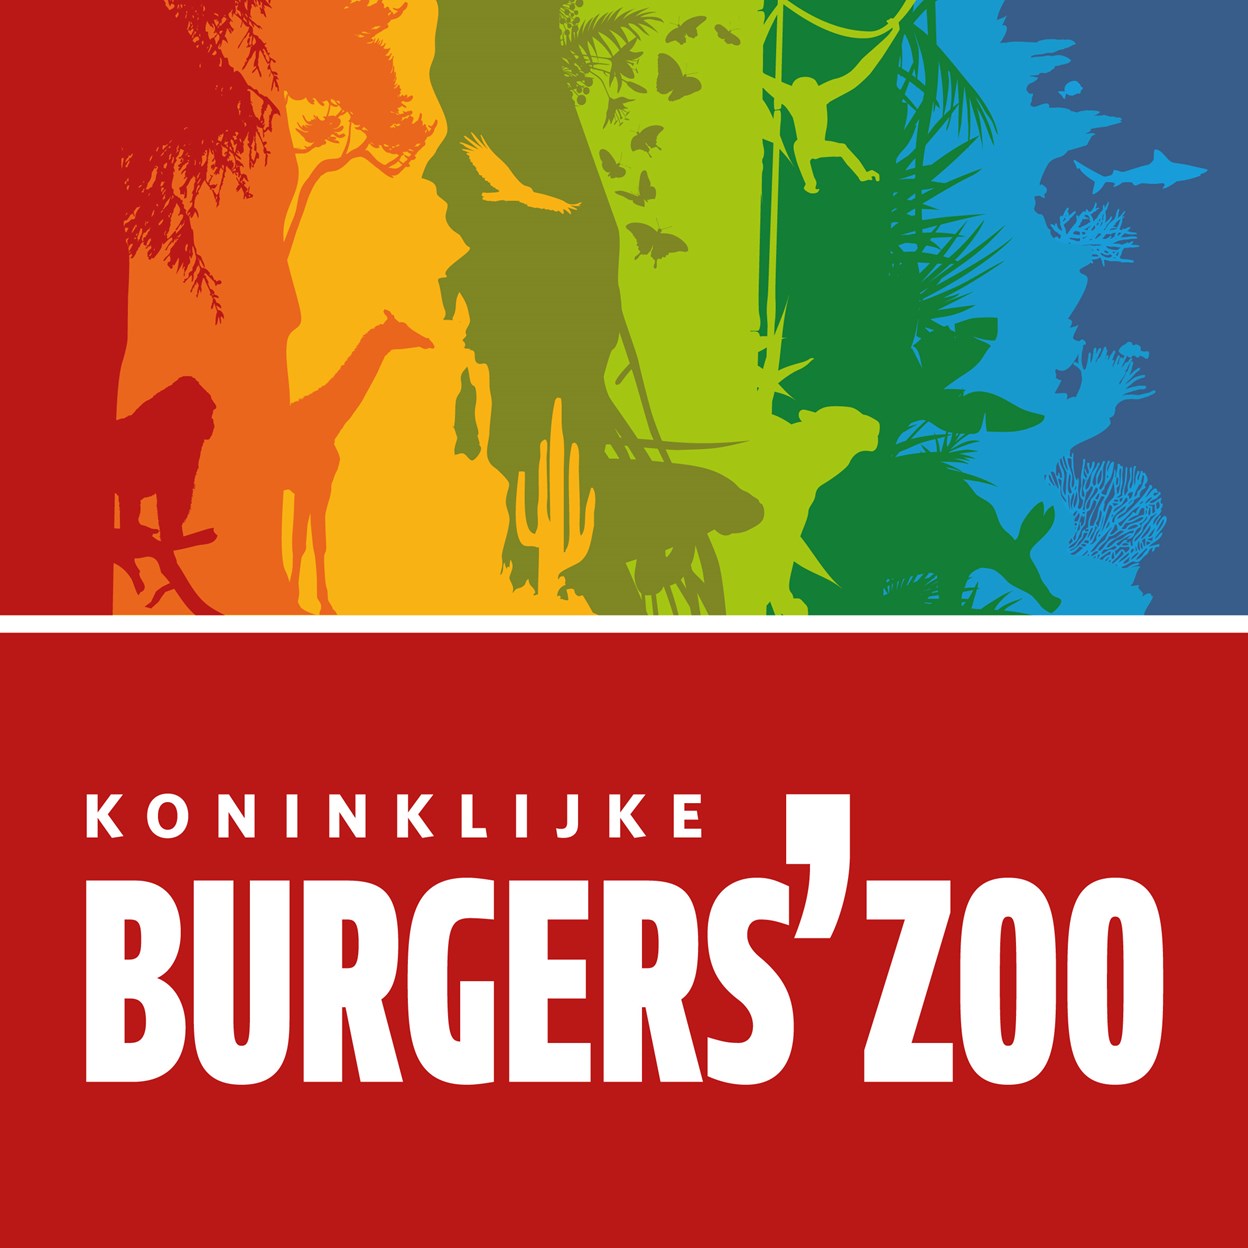 (c) Burgerszoo.nl